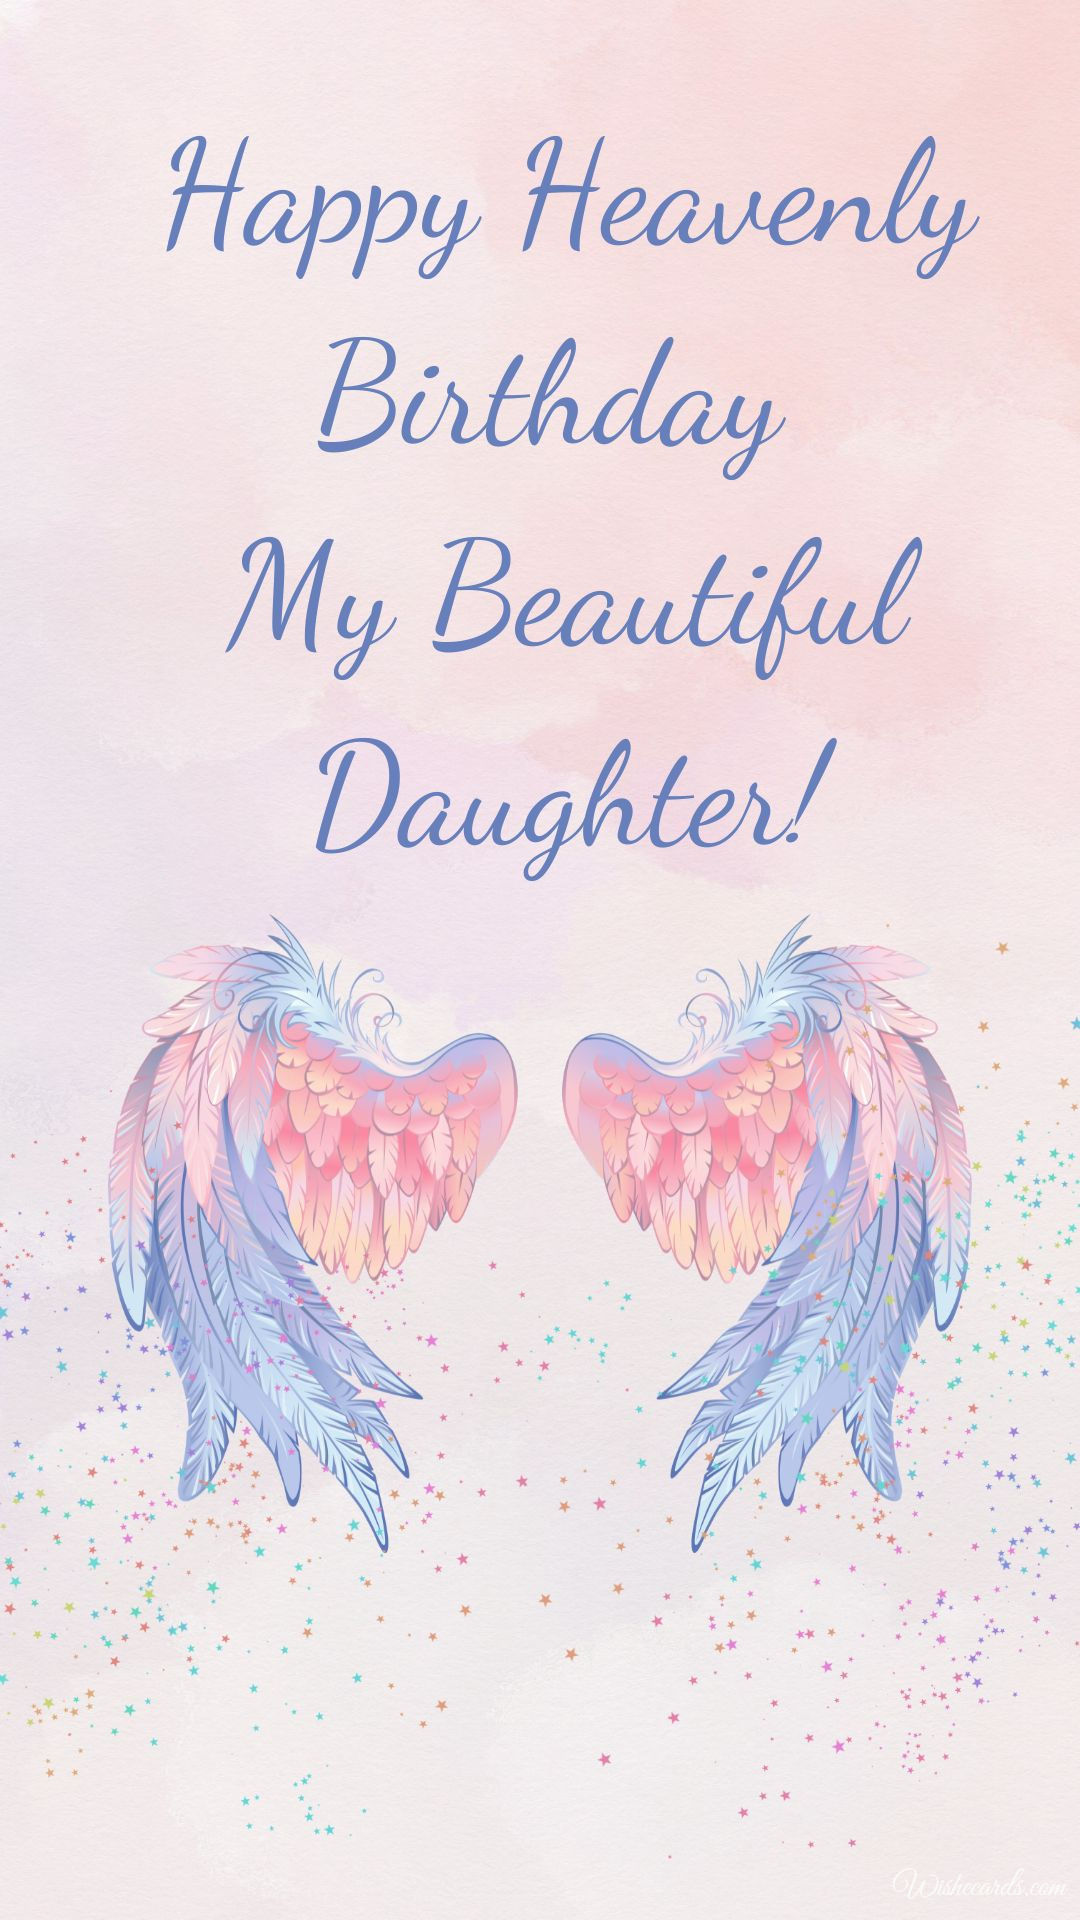 Happy Birthday to My Beautiful Daughter in Heaven